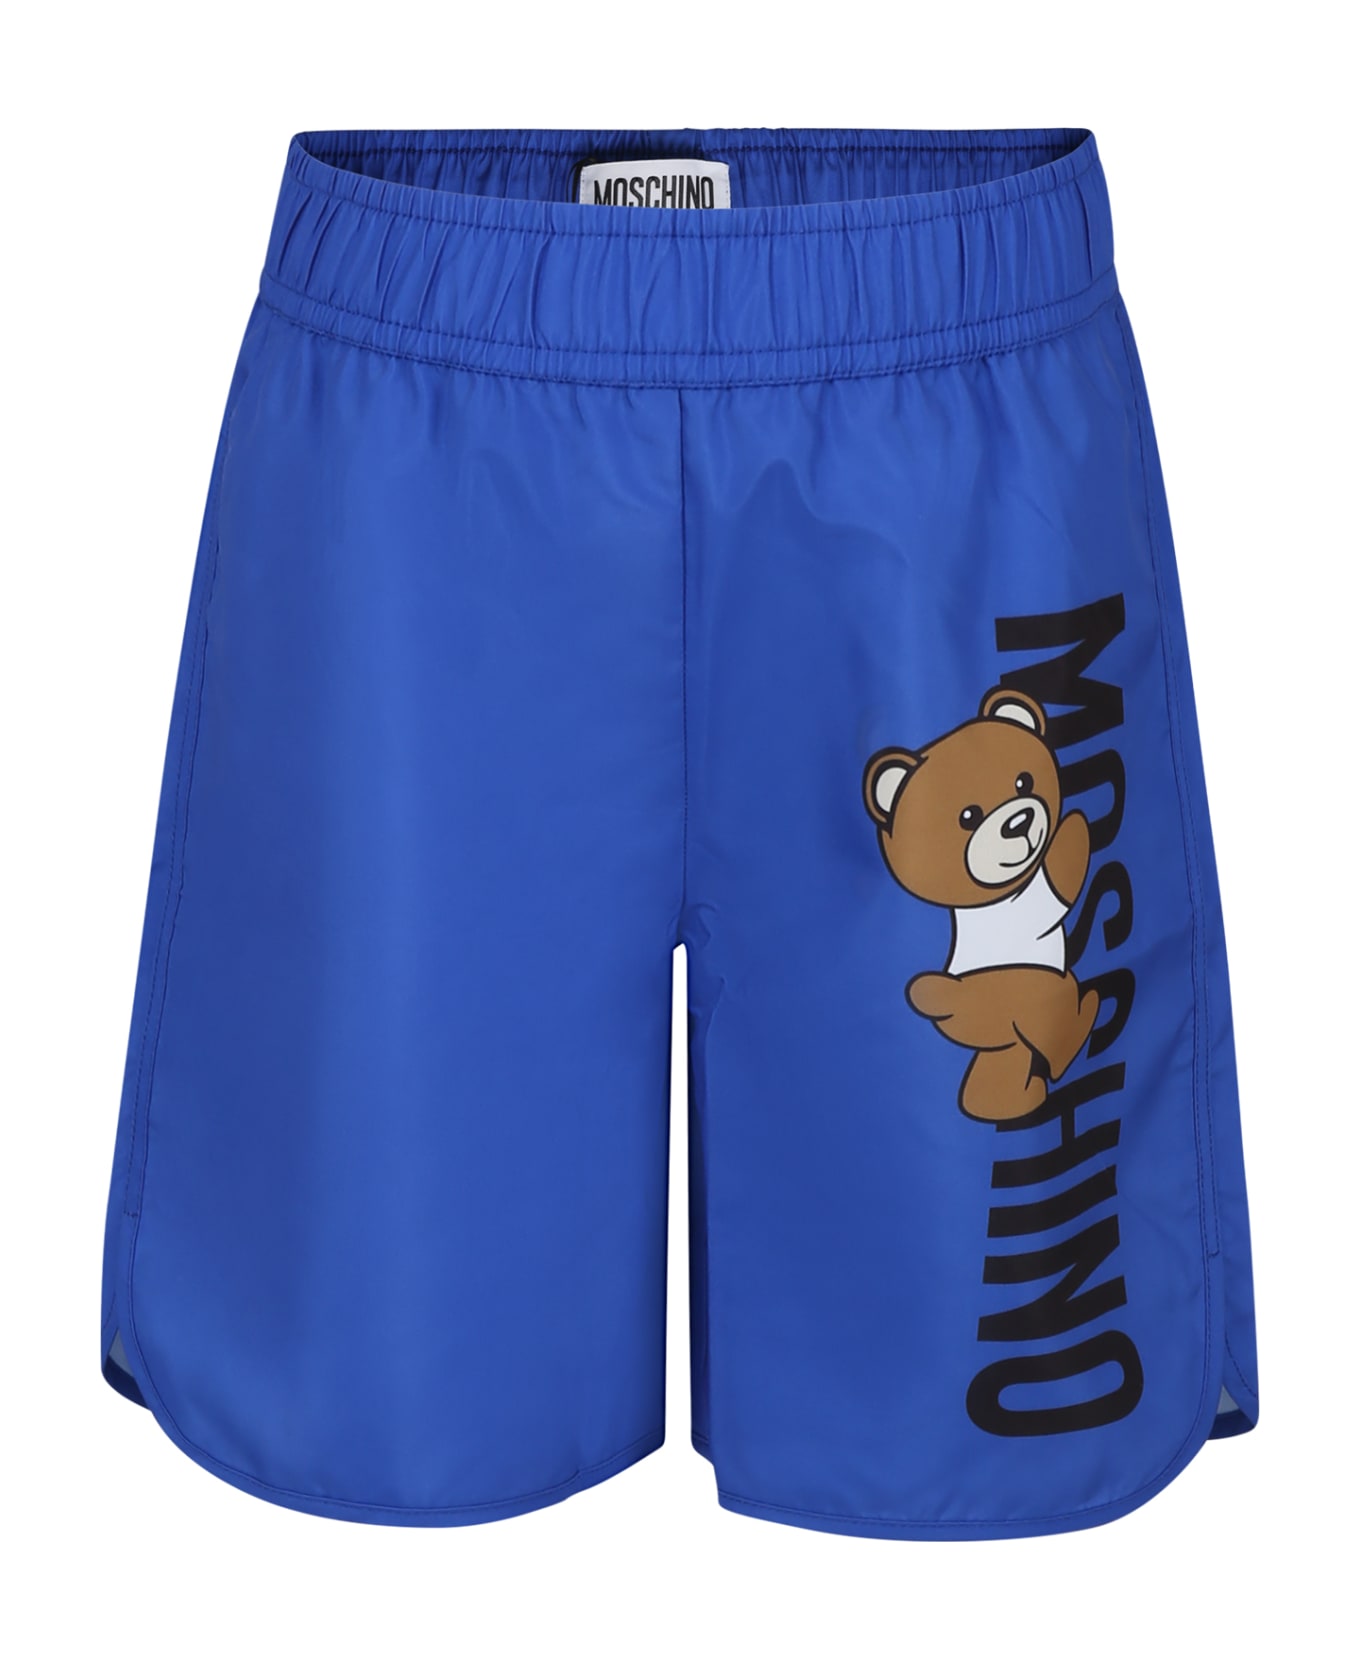 Moschino Blue Swim Shorts For Boy With Teddy Bear And Logo - Blue